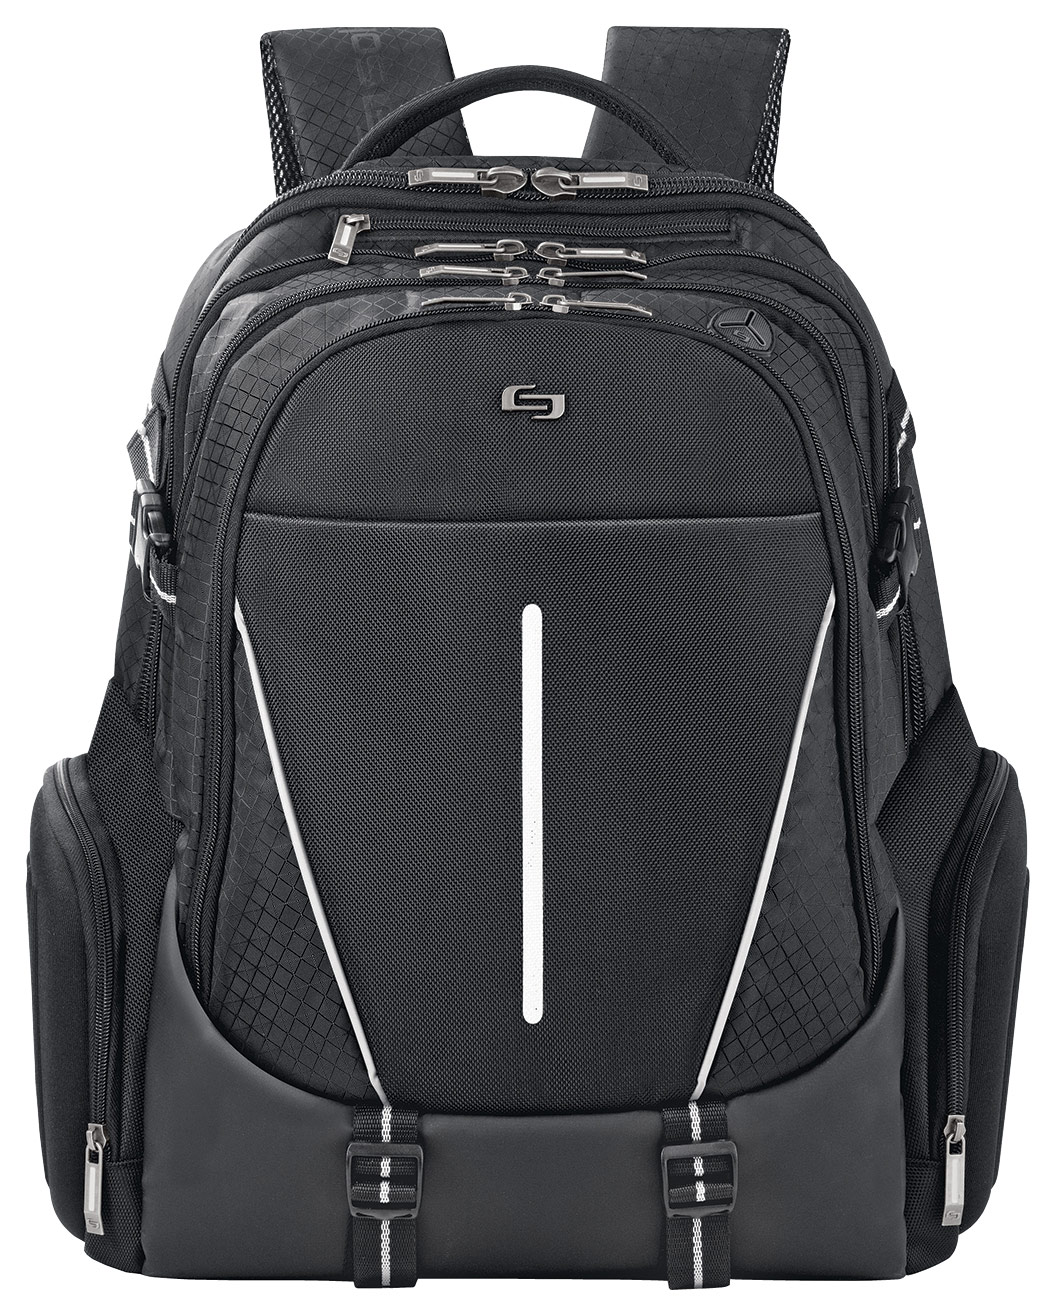 Revolutionary anger Harmful Solo Active Laptop Backpack for 17.3" Laptop Black/Gray ACV700-4 - Best Buy